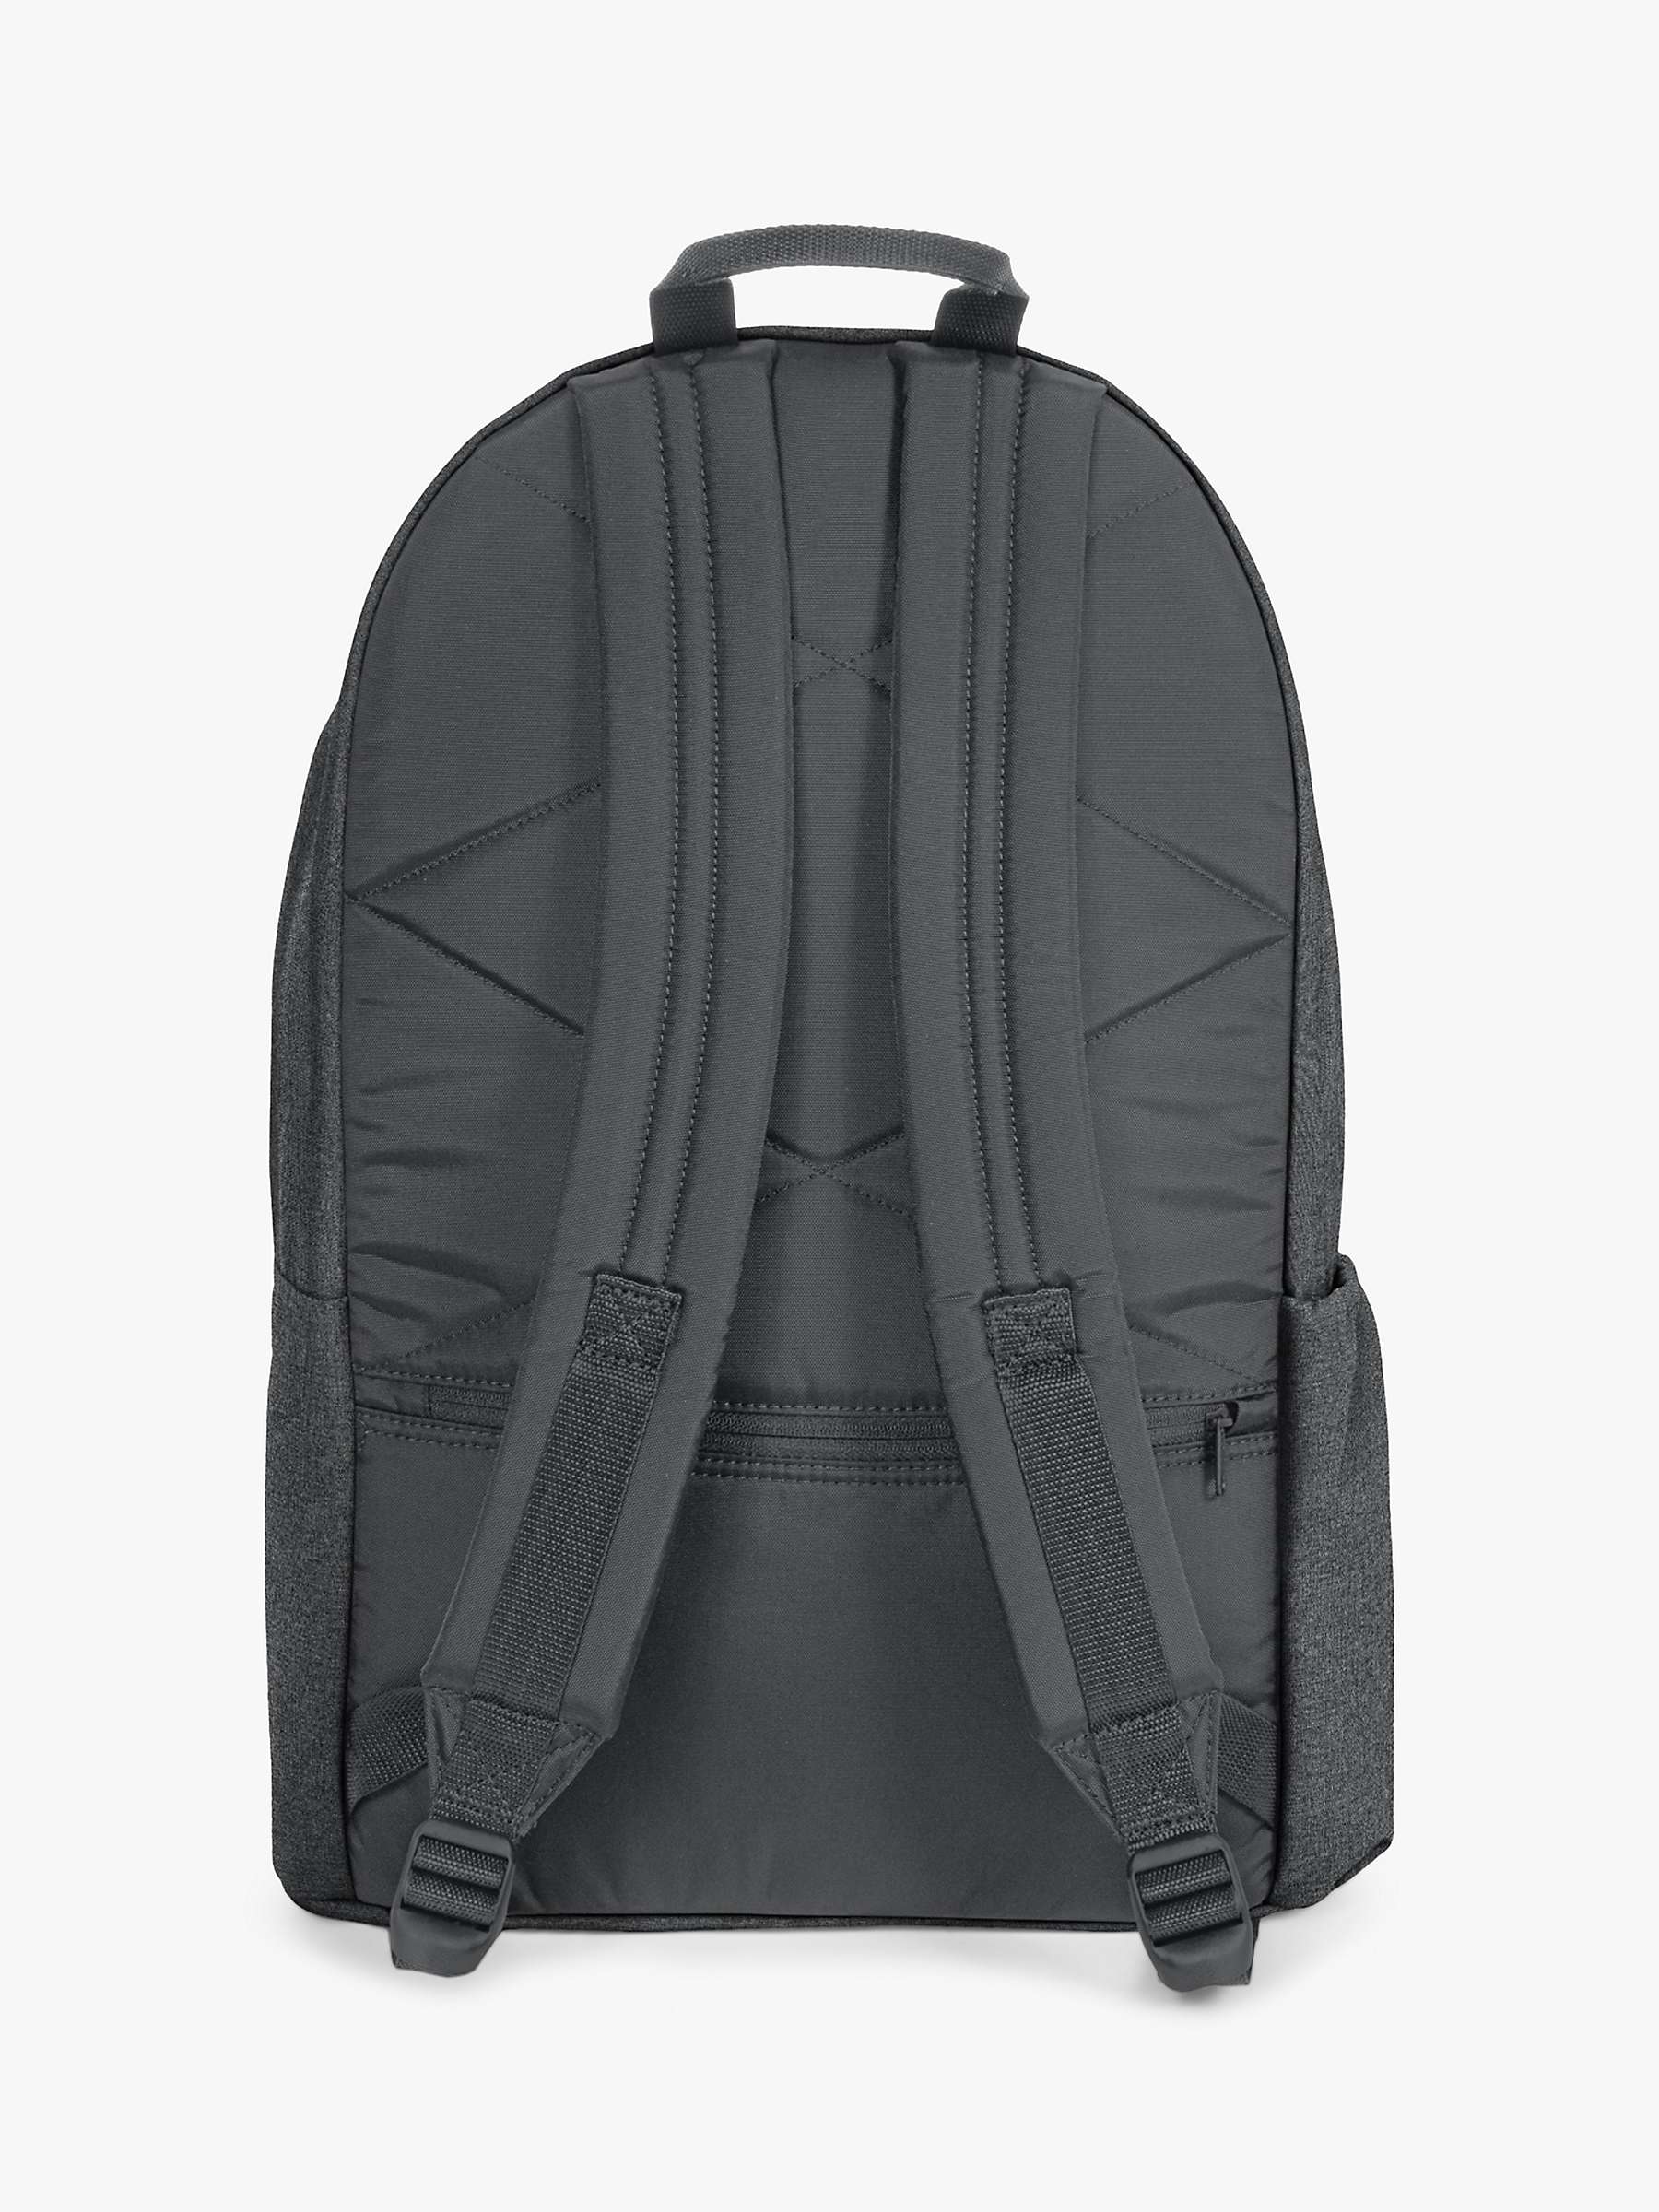 Eastpak Padded Double Backpack, Black Denim at John Lewis & Partners